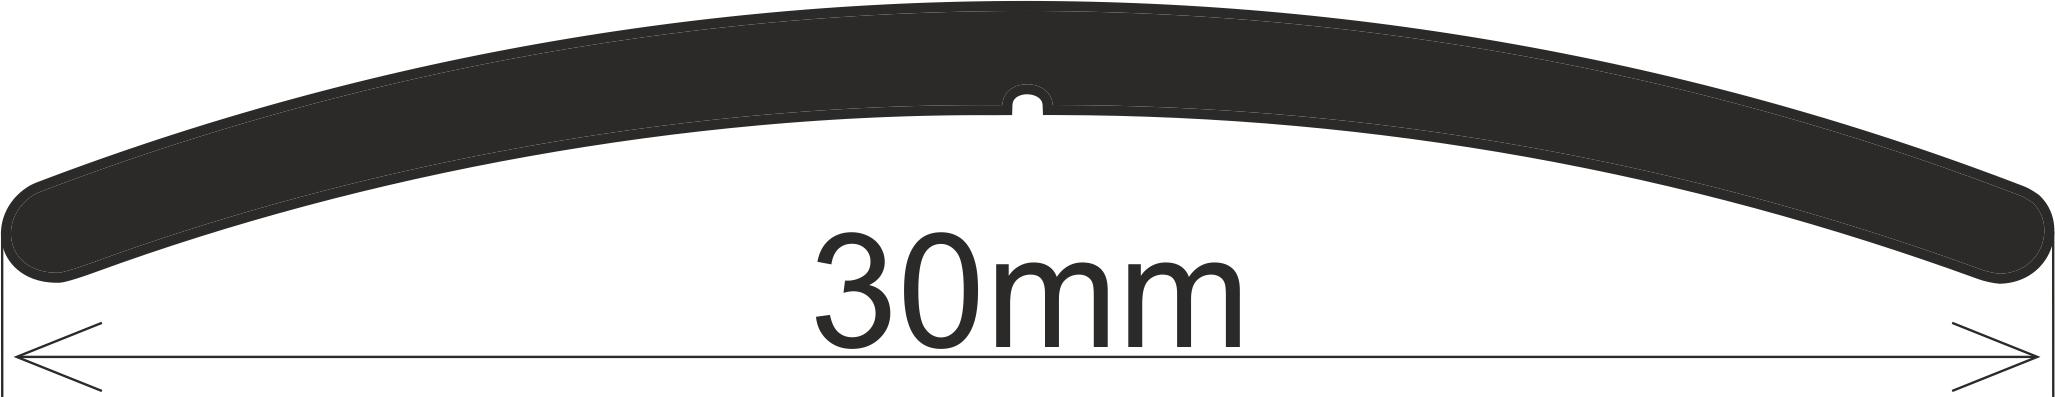 Bohemia profil pechodov lita samolepc 30mm pvc flie BL 90cm